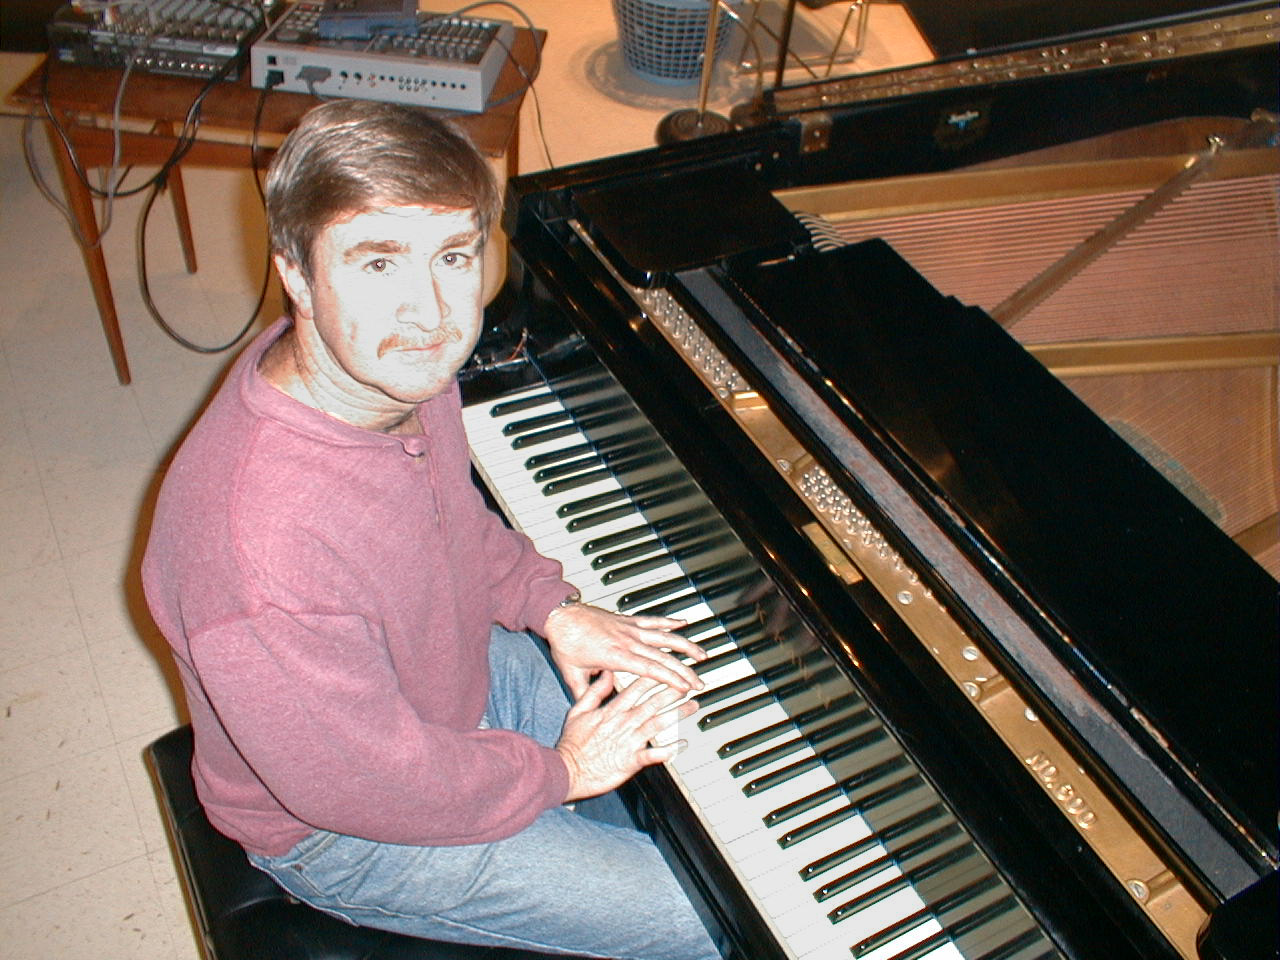 Brian playing piano